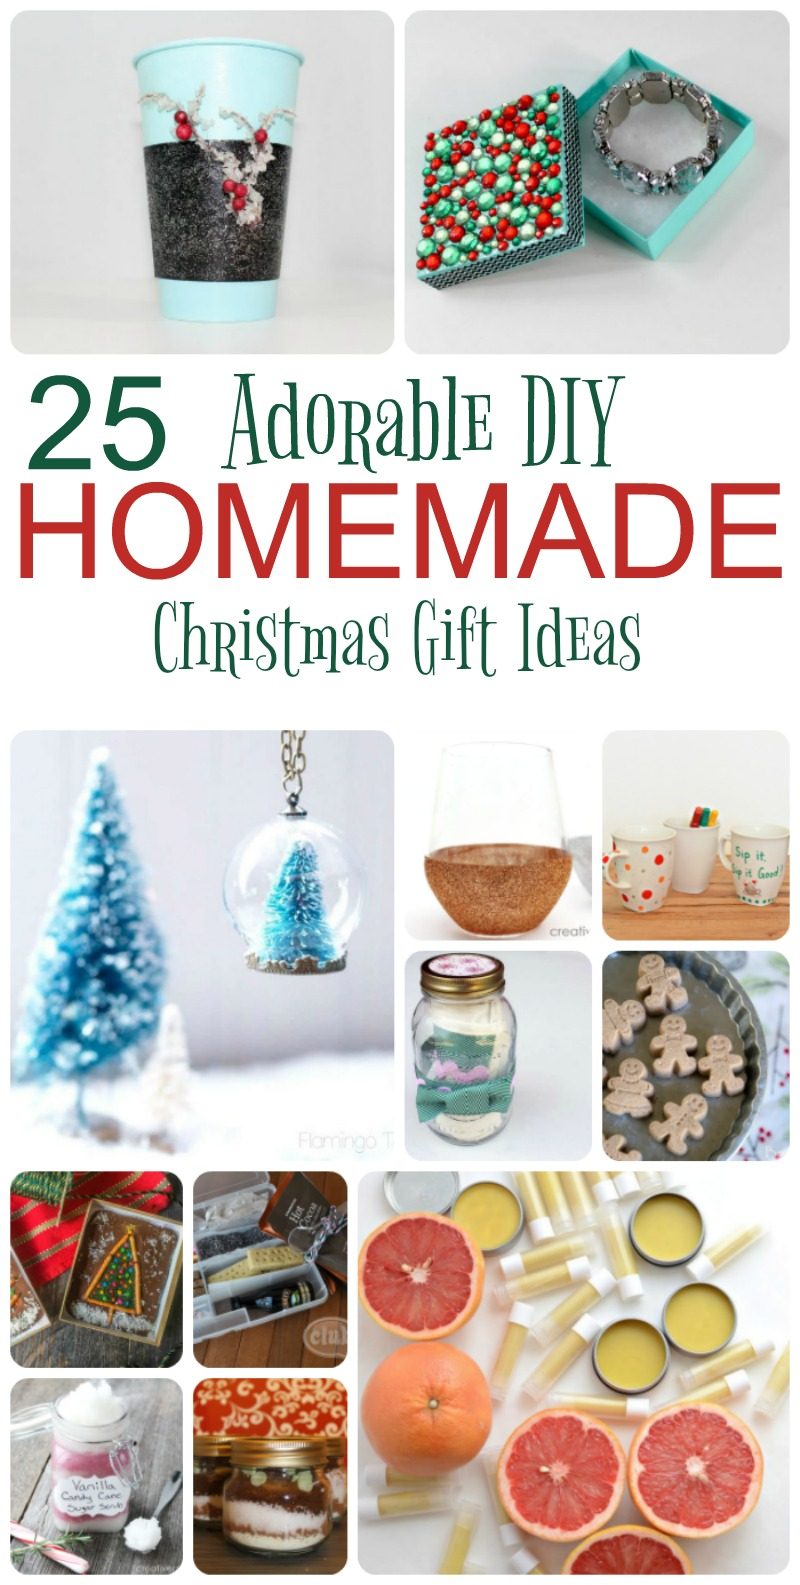 25 Adorable Homemade Gifts to Make for Christmas - Pretty ...
